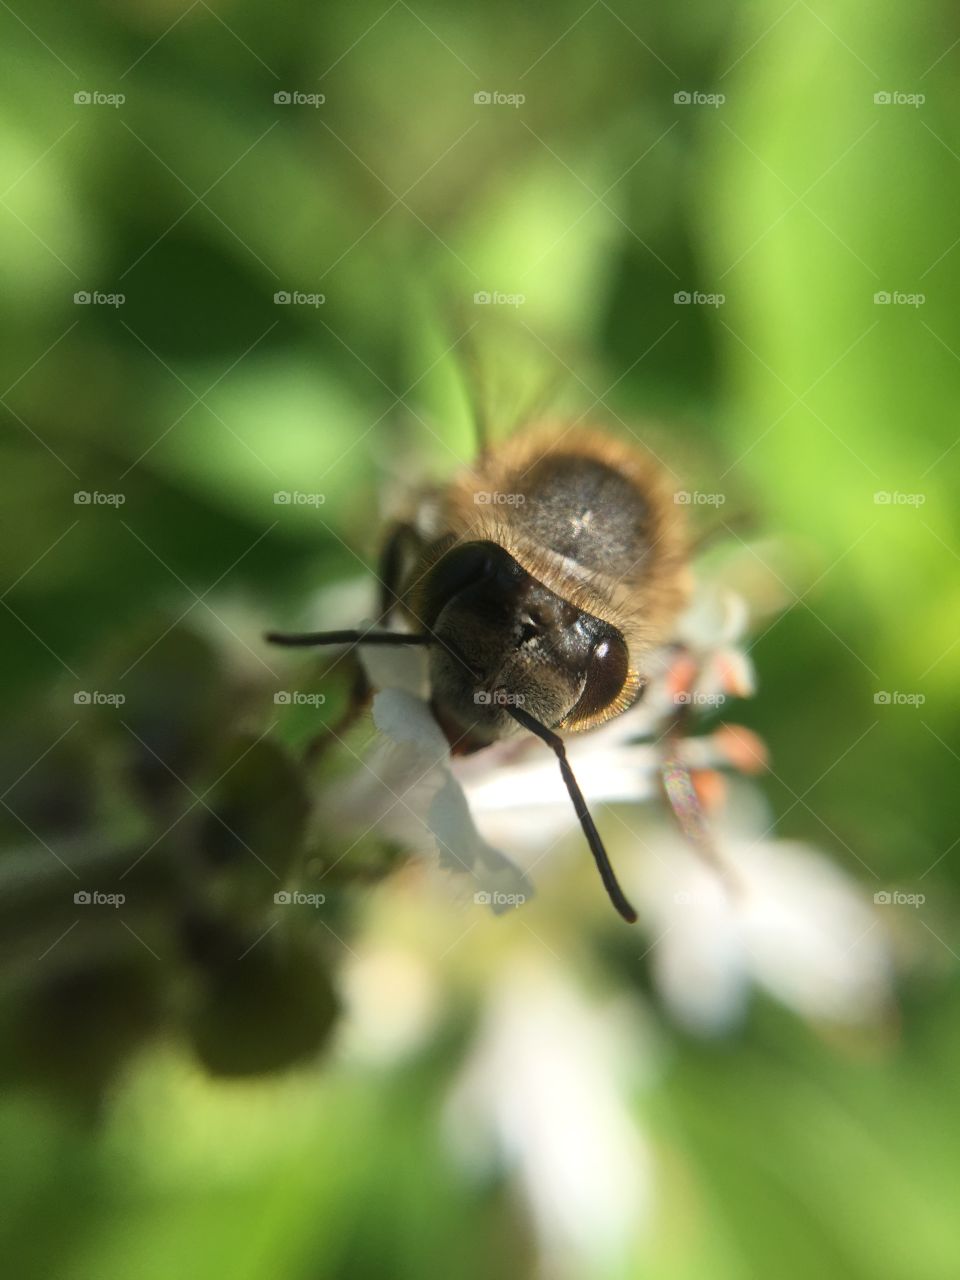 Bee3